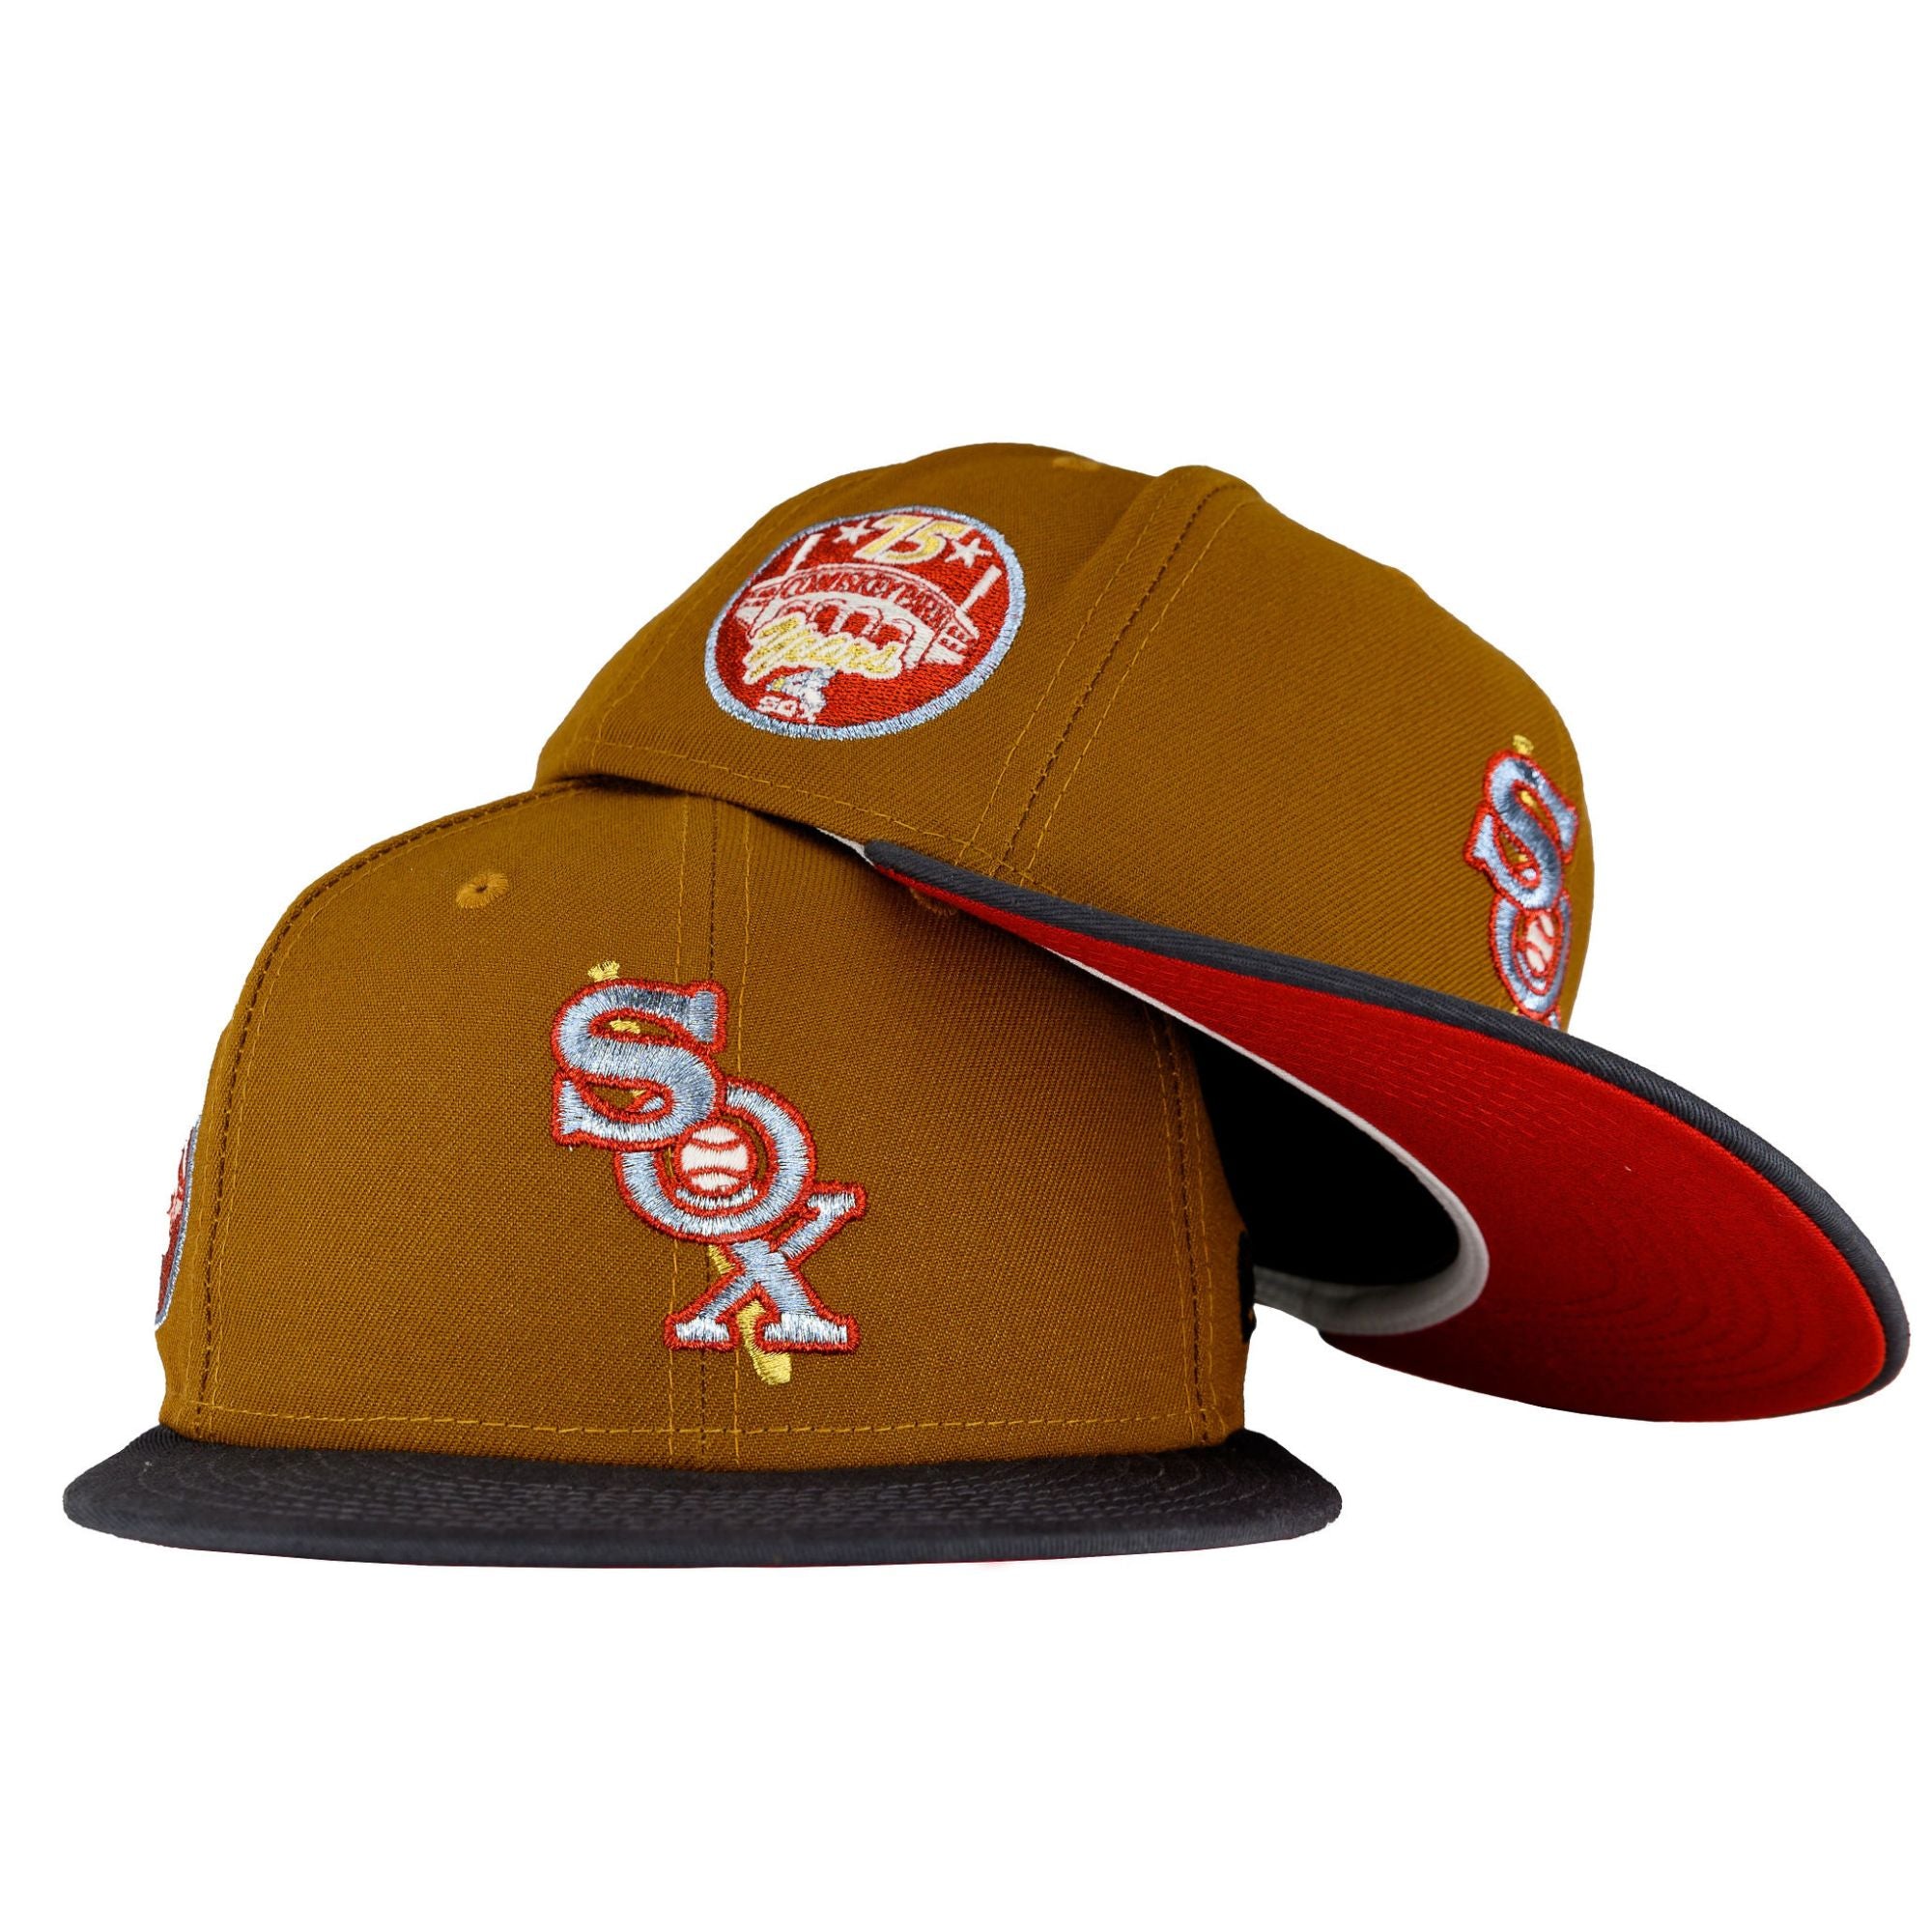 New Era Men's Brown Boston Red Sox Classic Cuffed Knit Hat